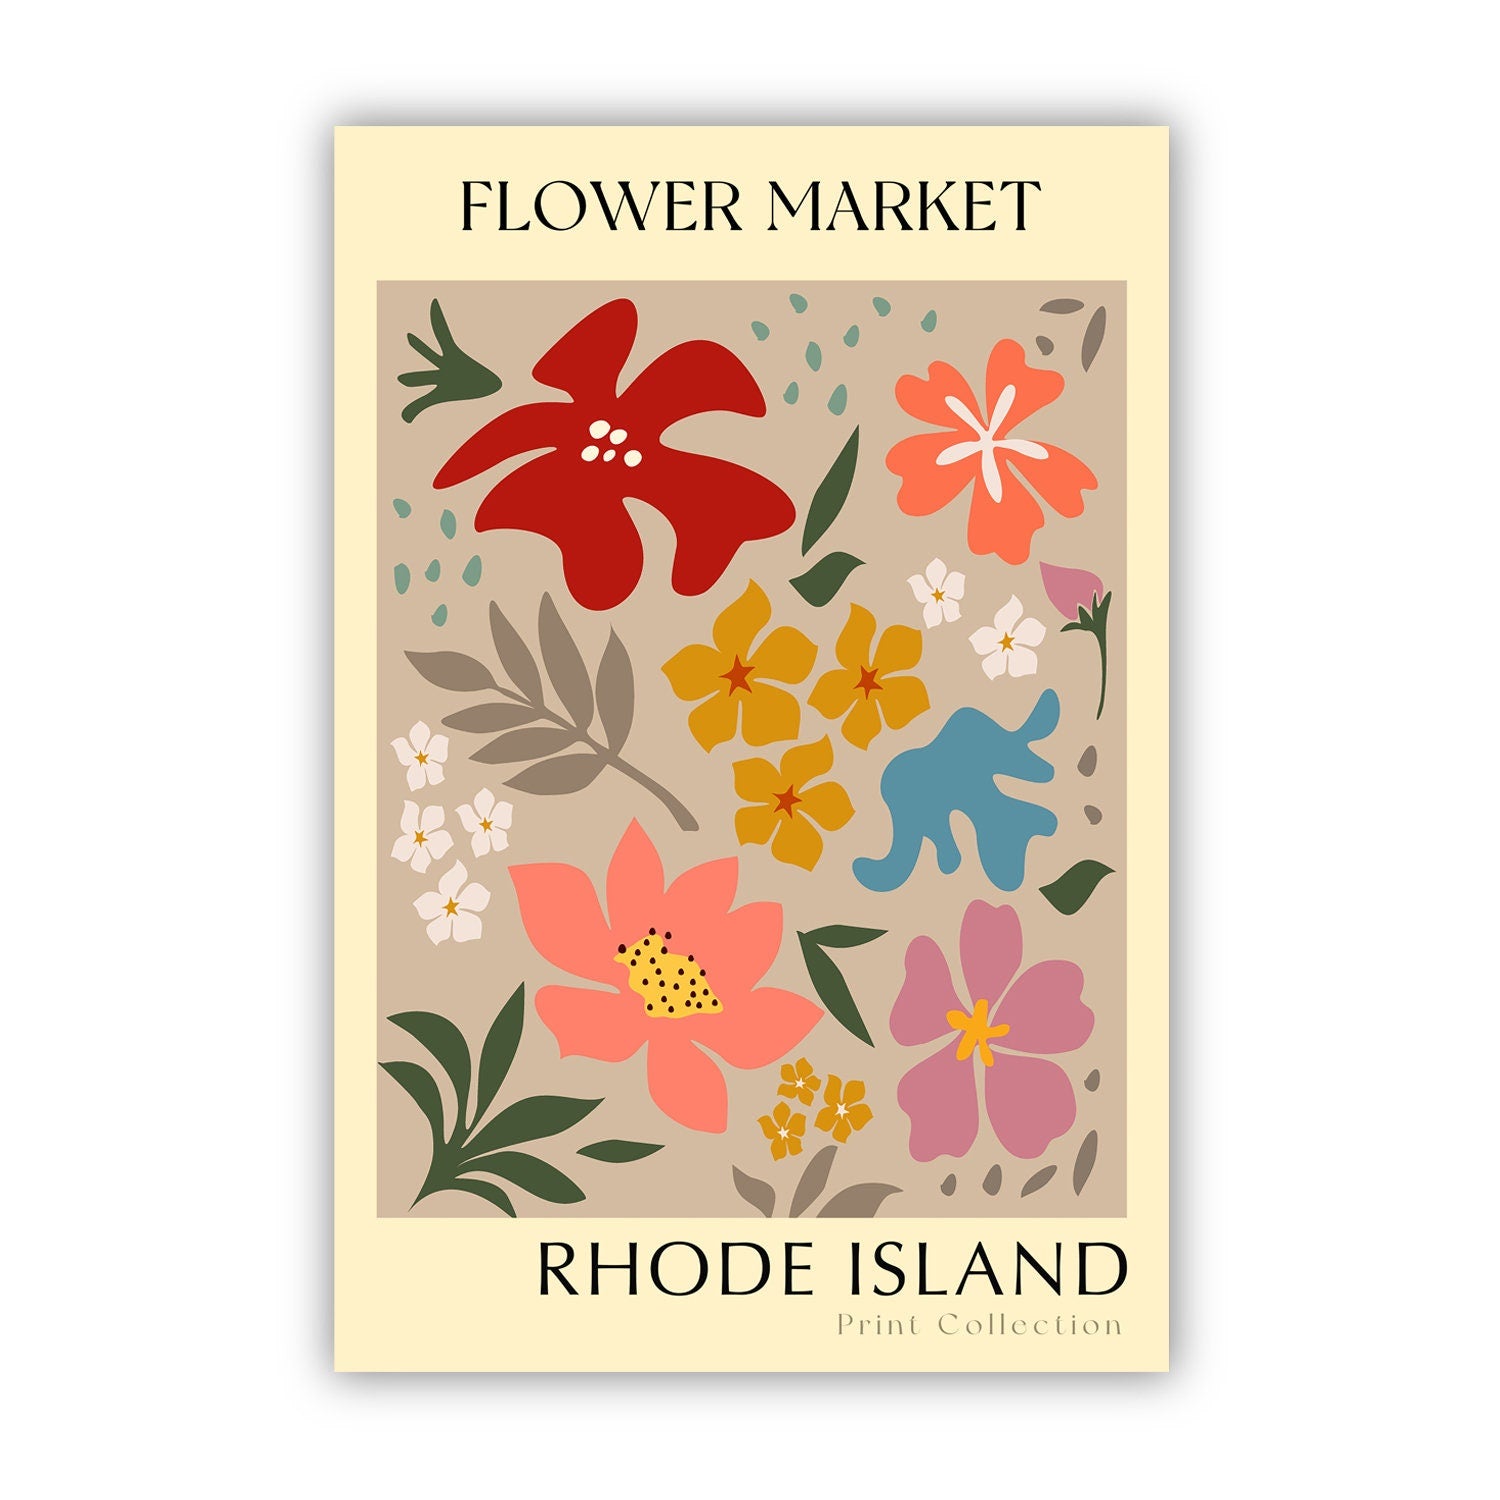 Rhode Island State flower print, USA states poster, Rhode Island flower market poster, Botanical poster, Nature poster artwork, Floral art